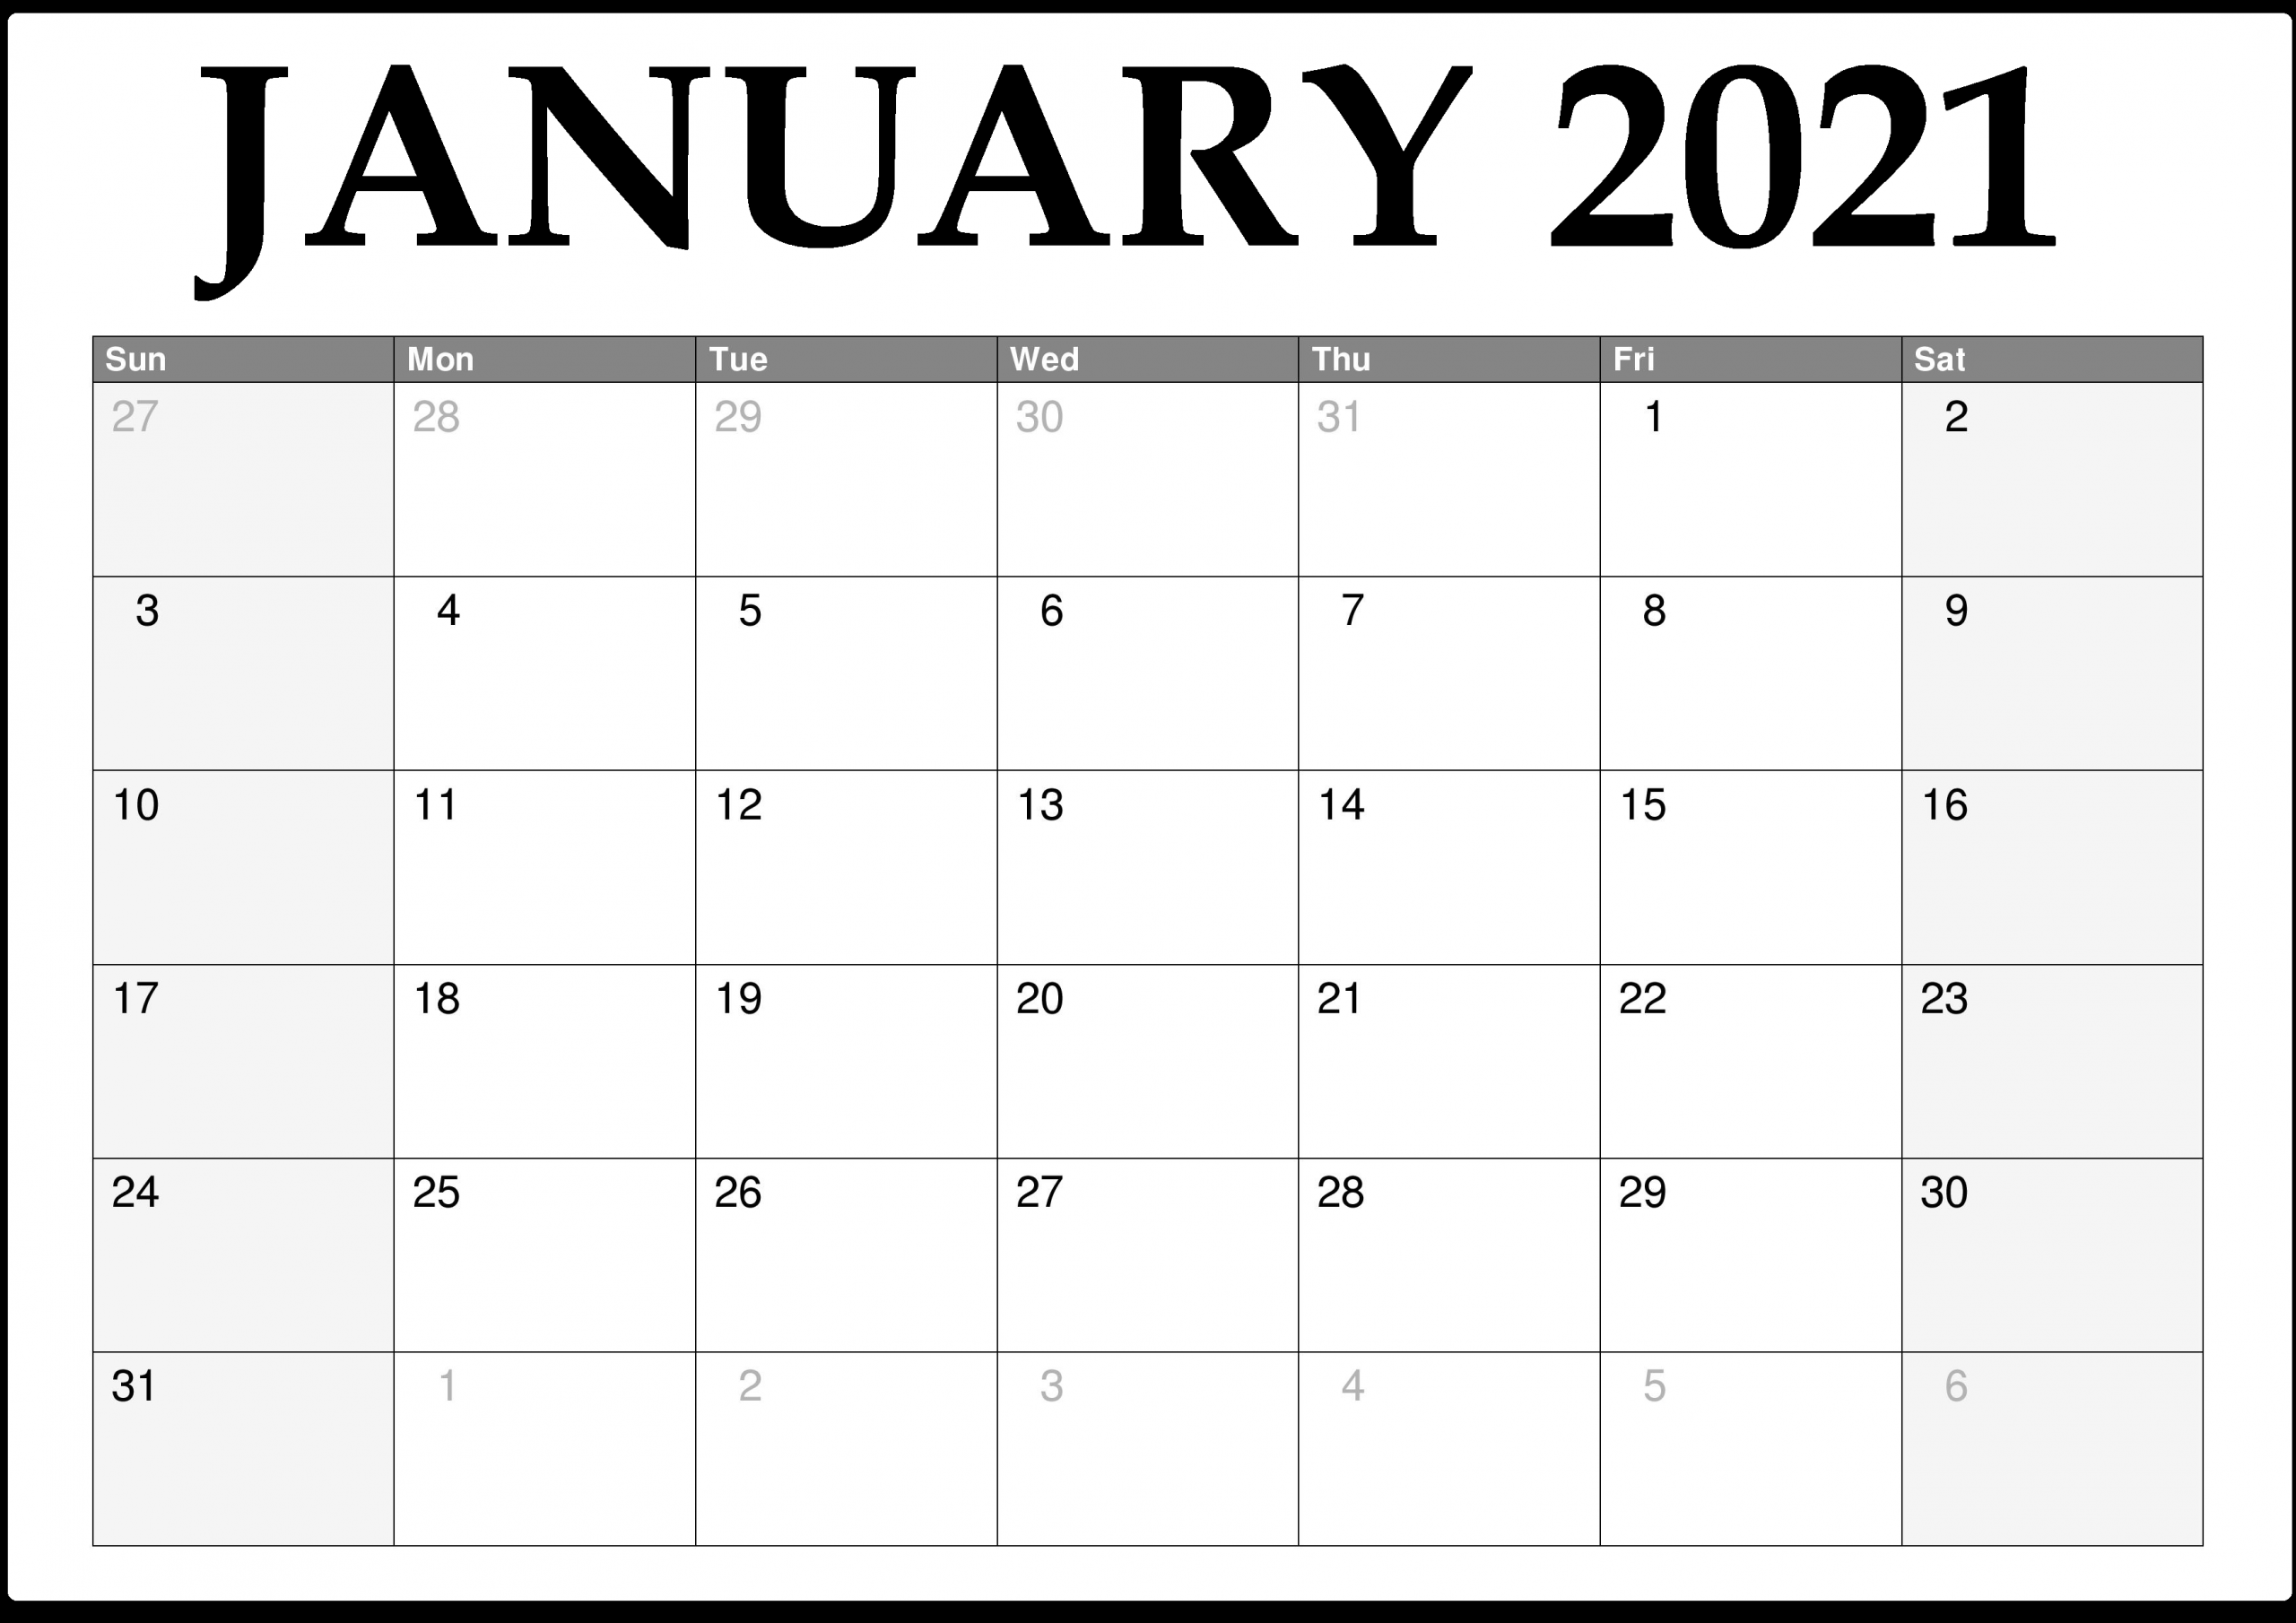 Free Printable January 2021 Calendar With Holidays - Free January To December 2021 Calendar With Holidays